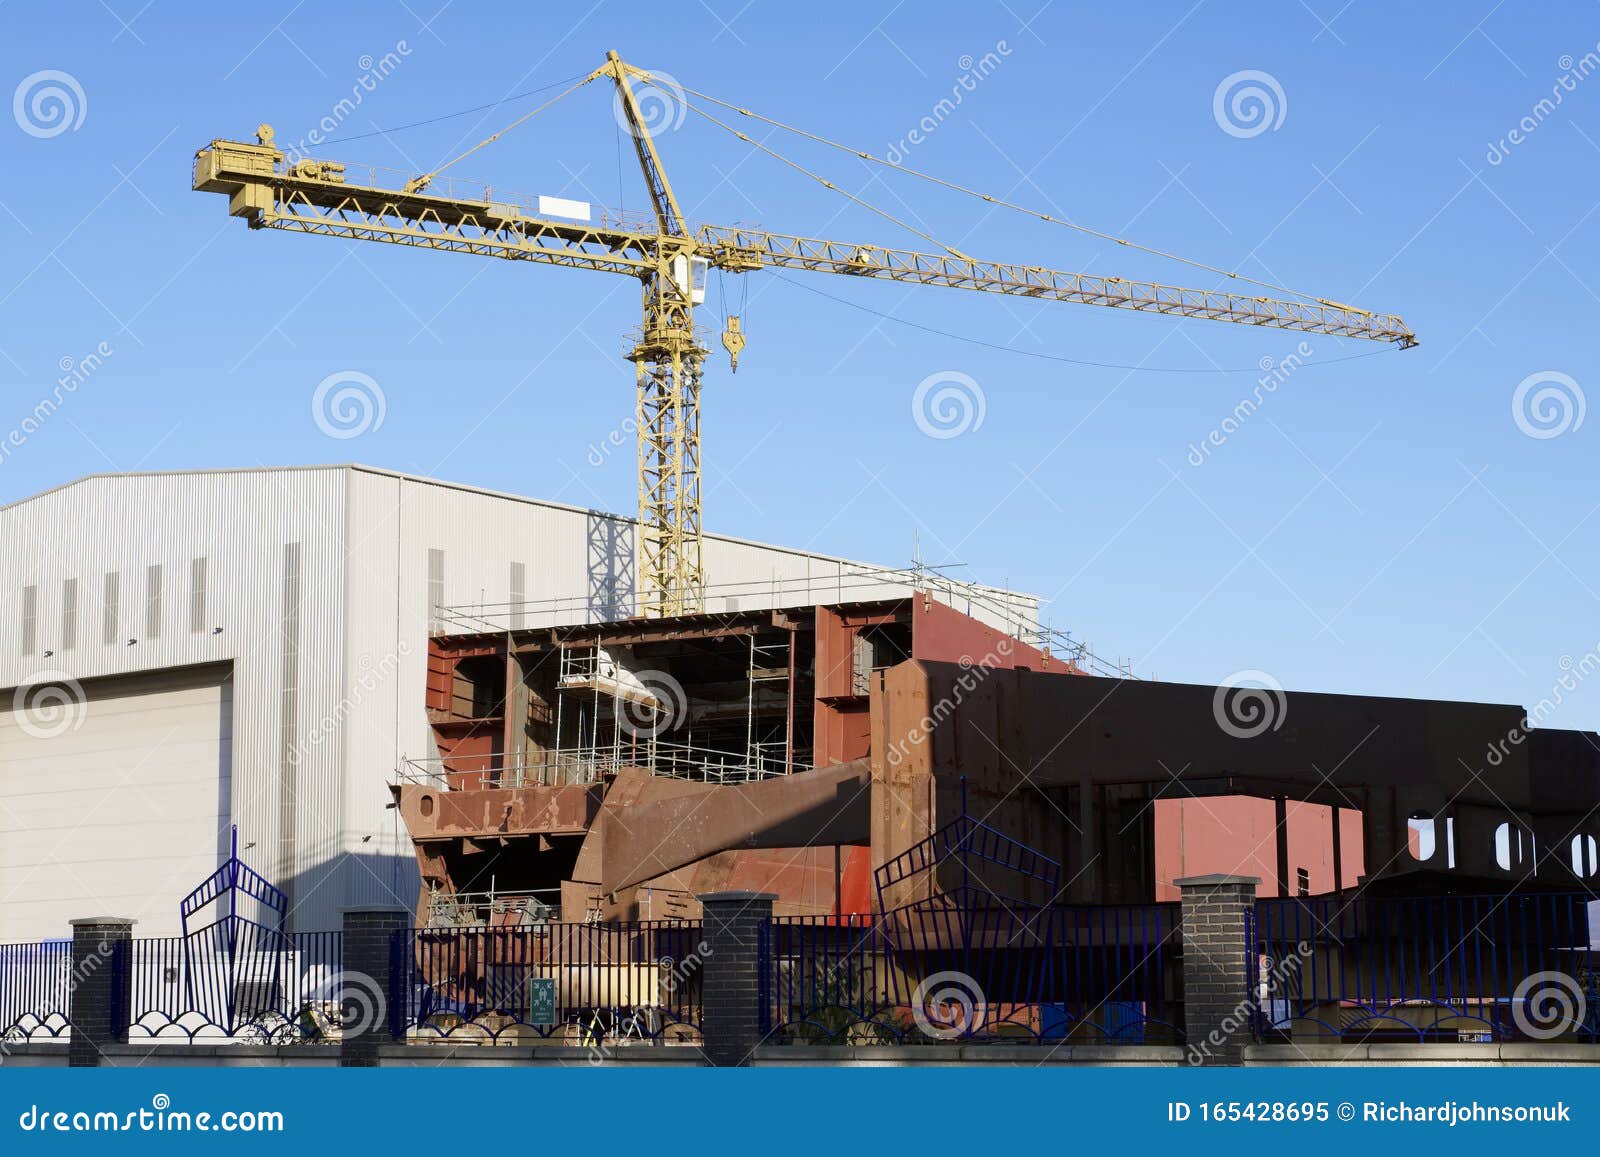 ship building and crane in port glasgow ferguson shipbuilding scaffold dock harbor harbour